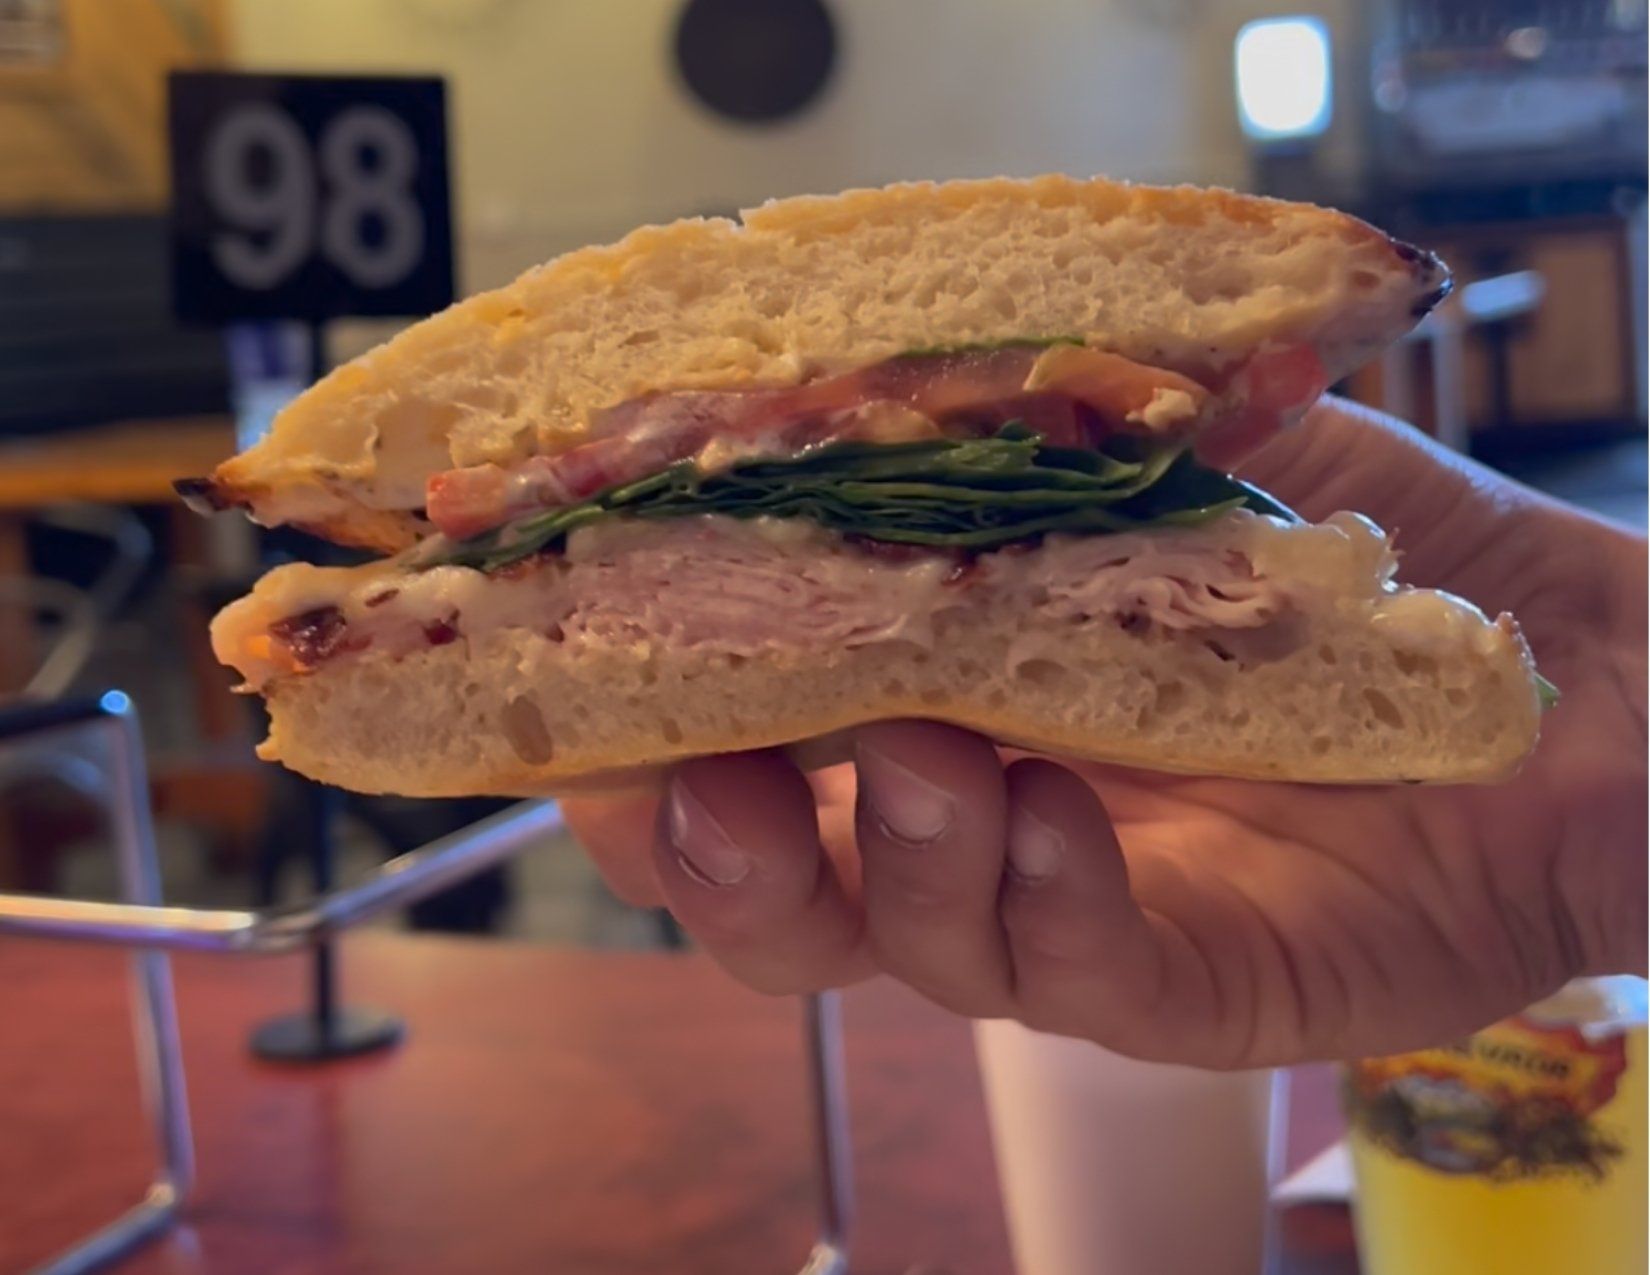 Hand holding fresh cut sandwich at Floyd and Company in Kingman Arizona